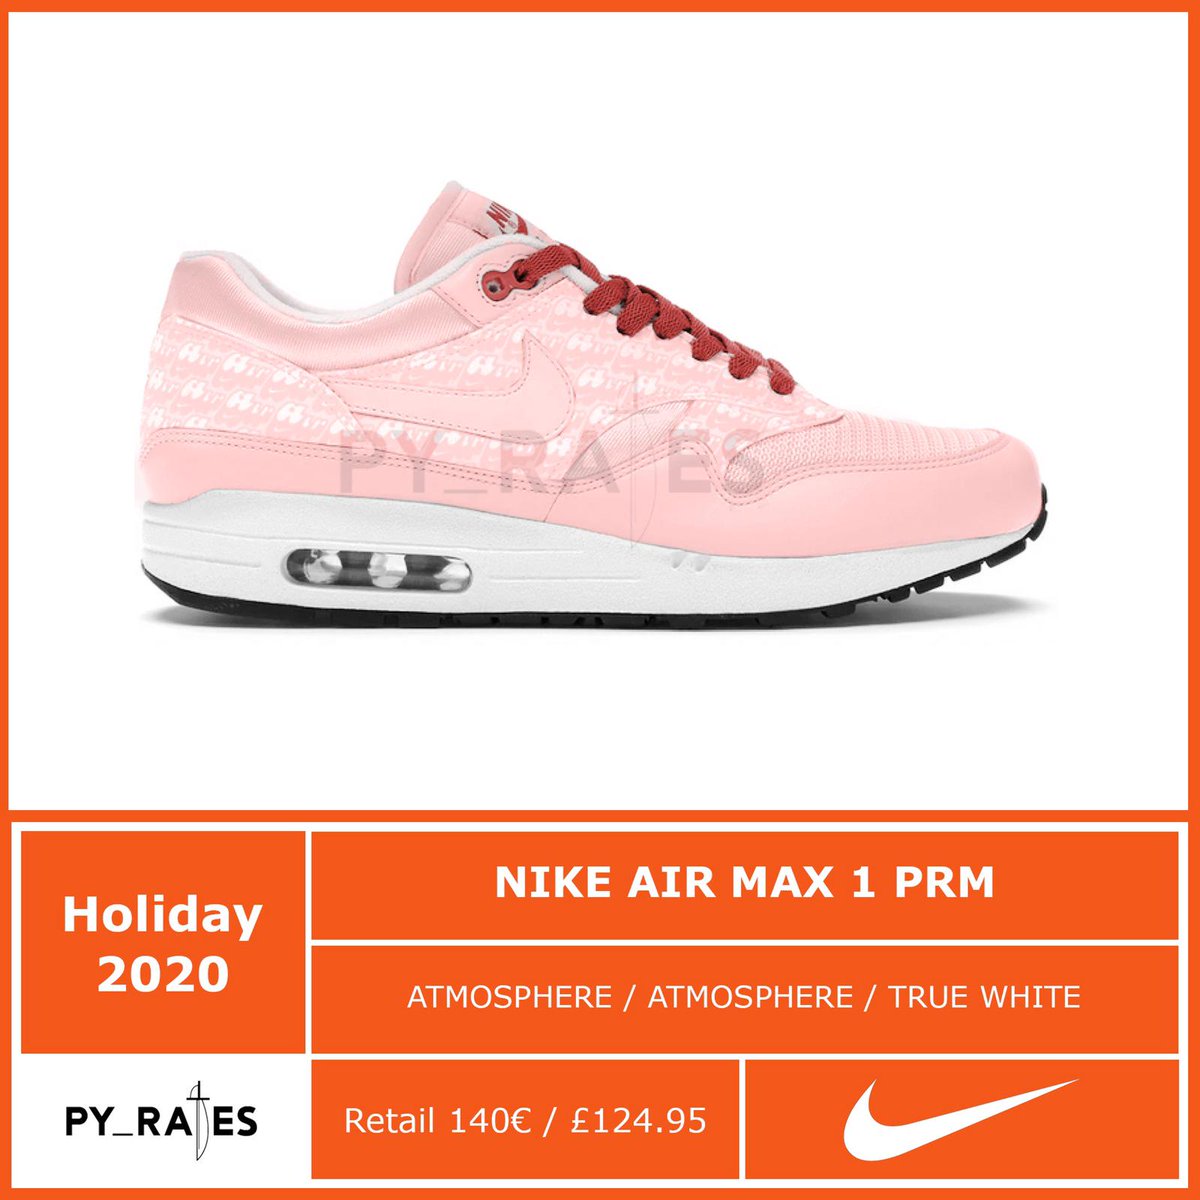 Nike Air Max 1 Powerwall Pink Lemonade Release Date